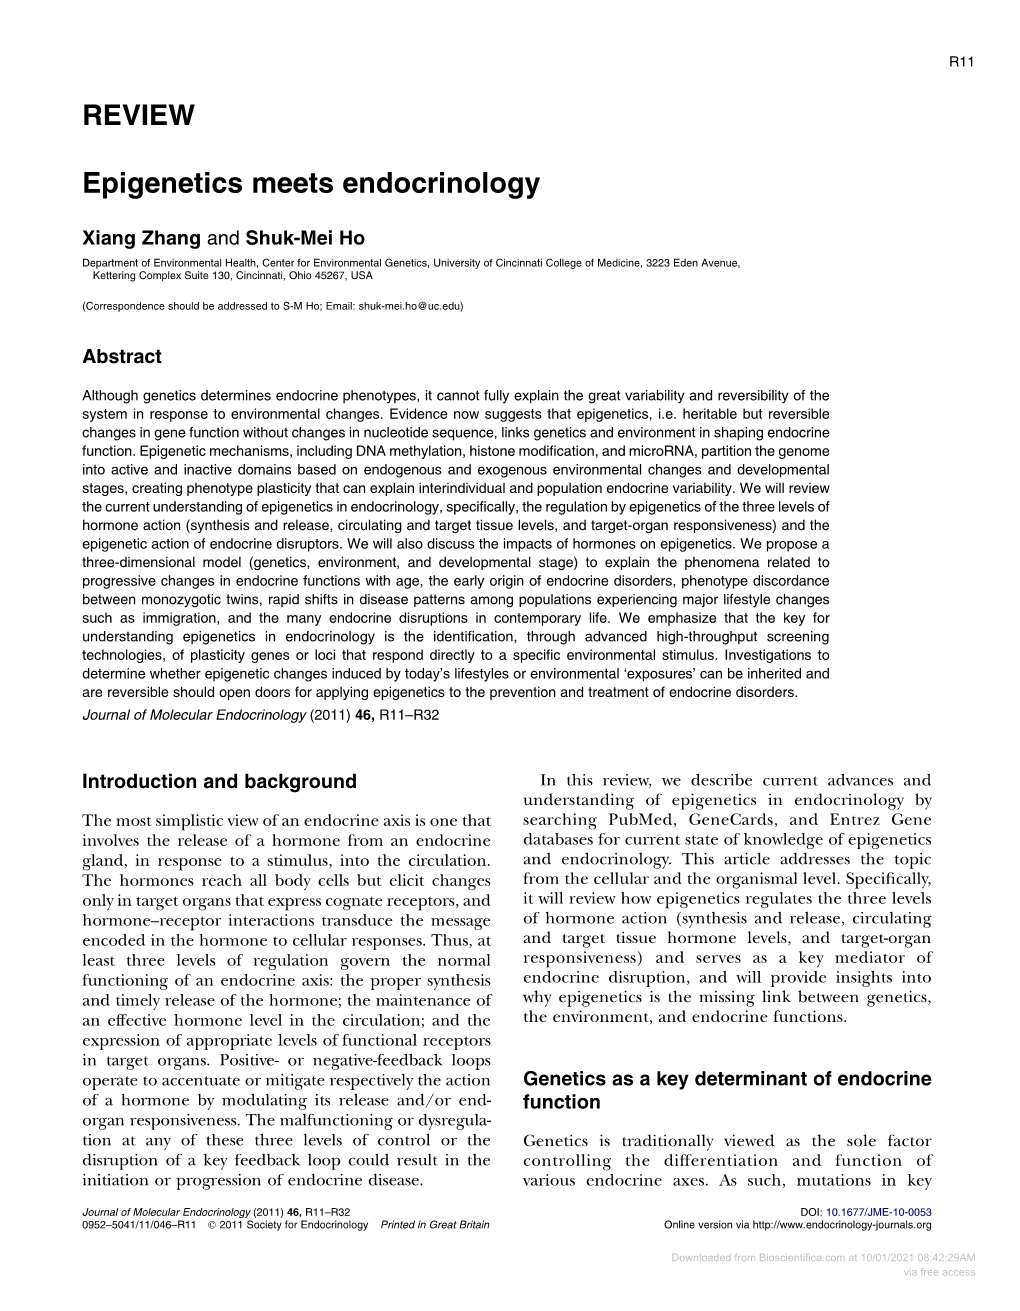 Epigenetics Meets Endocrinology